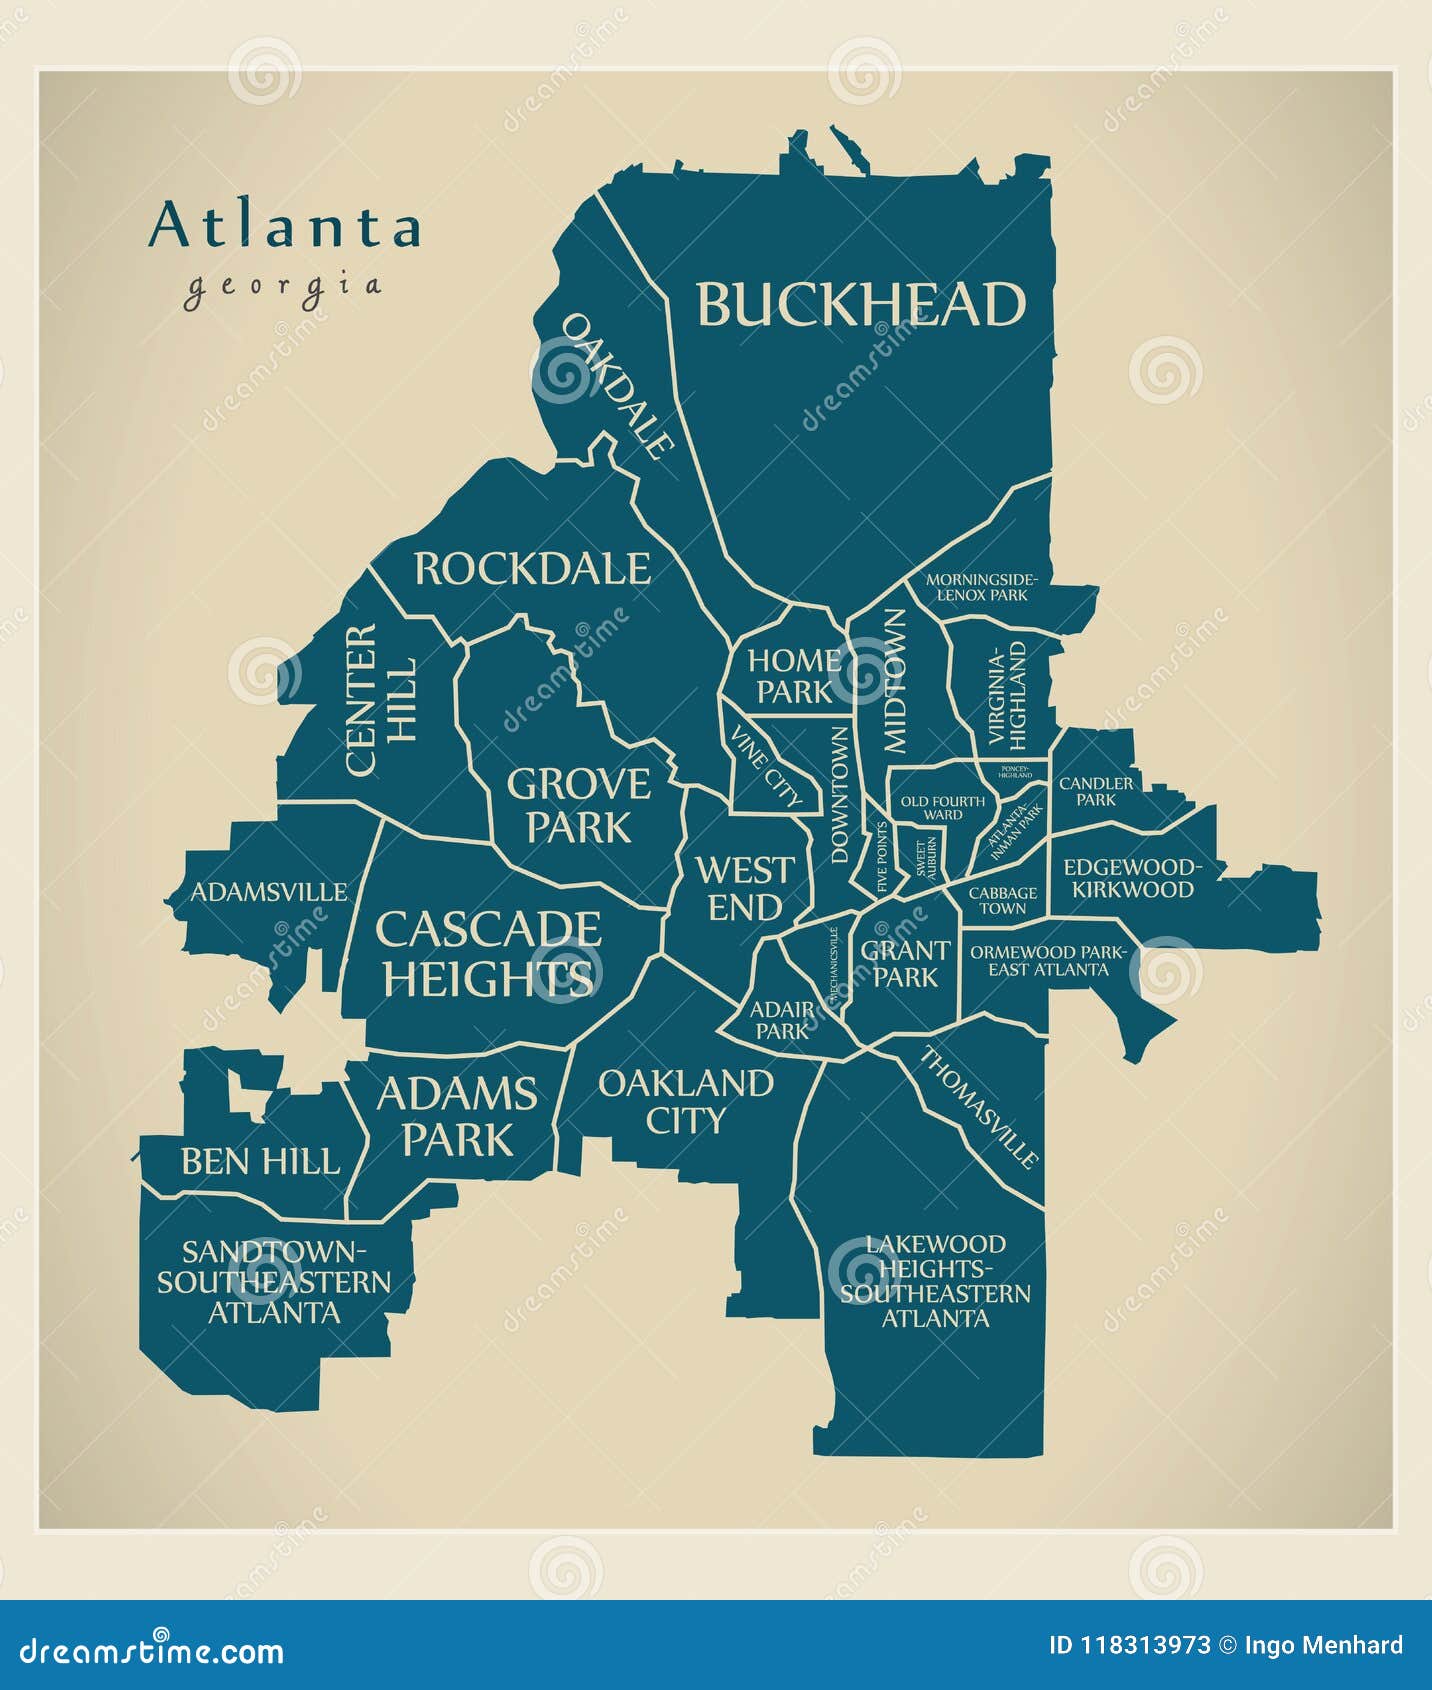 Atlanta Ga Neighborhood Map 